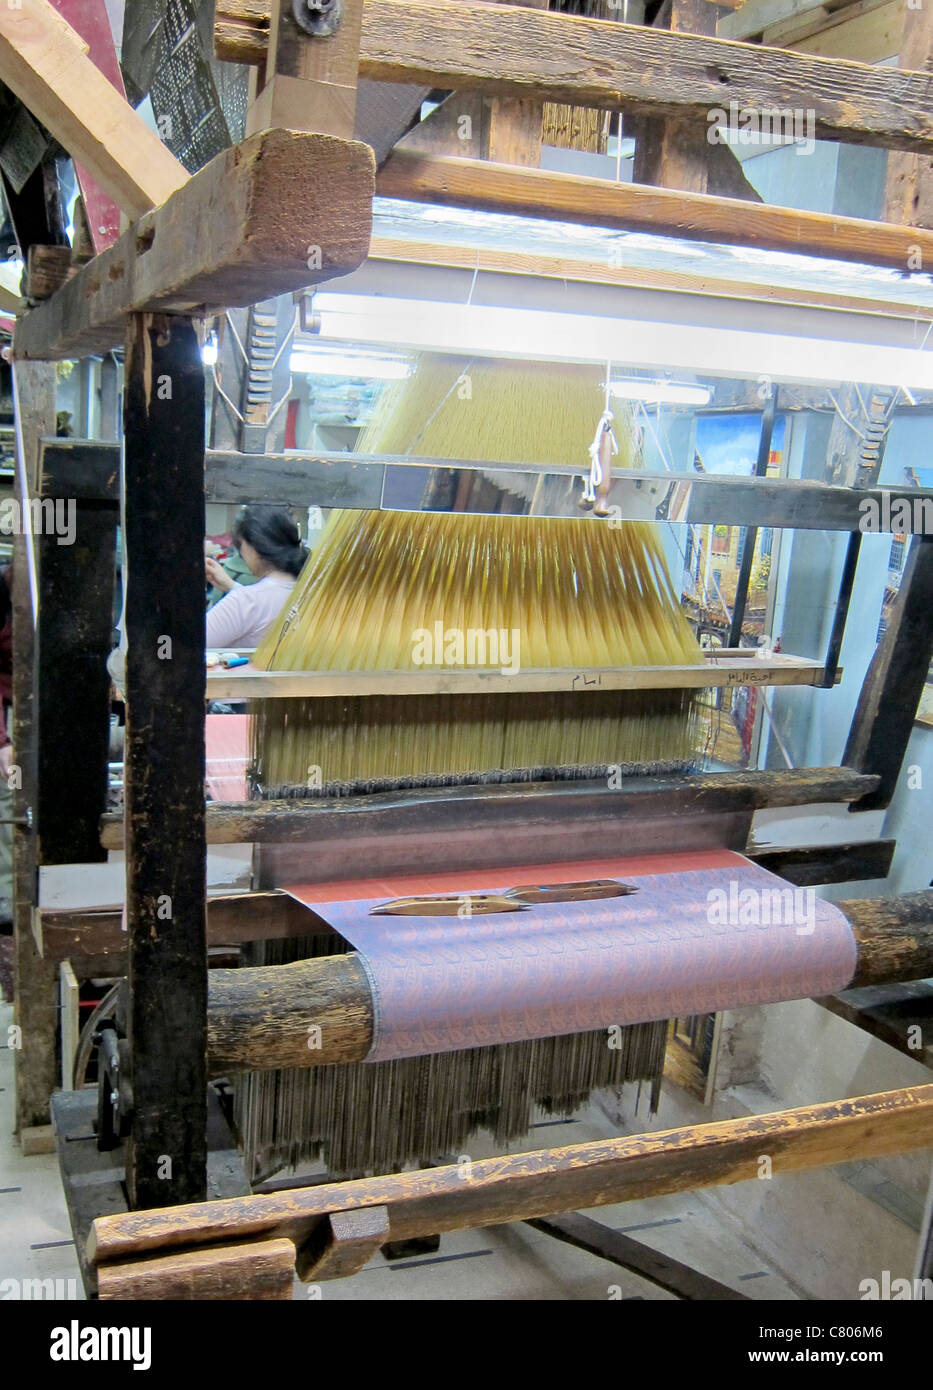 Damascus, Damaskus, Syria, Syrien Handwerk craft handcraft Webstuhl loom hand loom weaving loom Seide silk Stock Photo